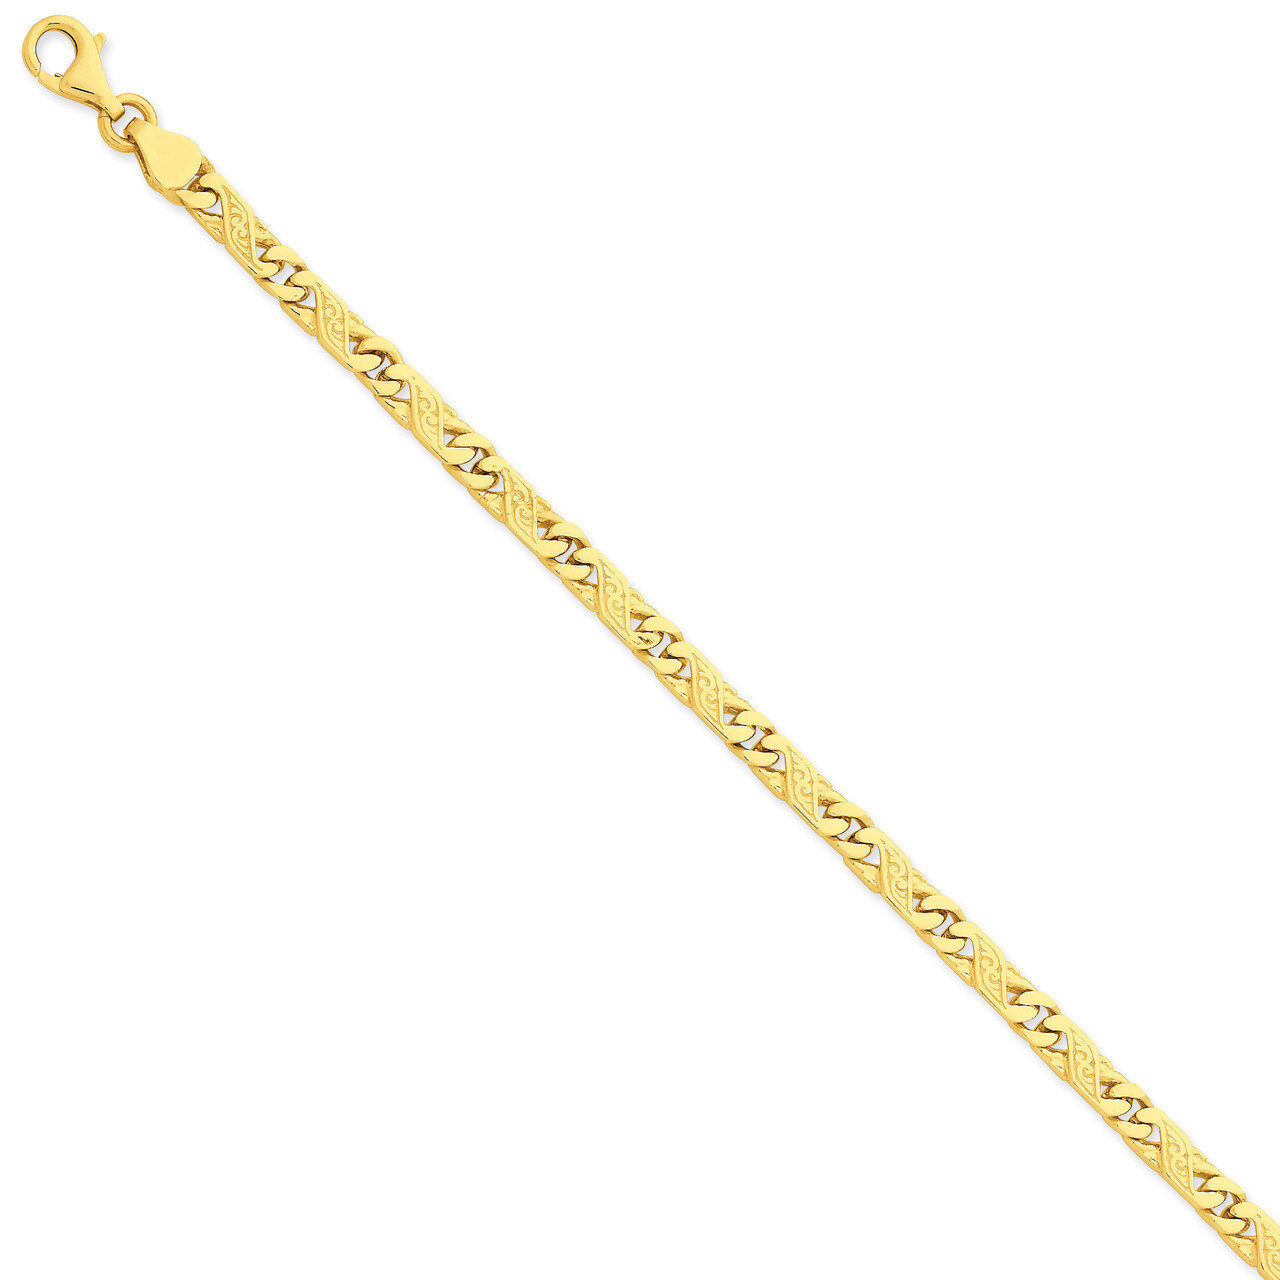 5mm Hand-Polished Fancy Link Chain 18 Inch 14k Gold LK161-18